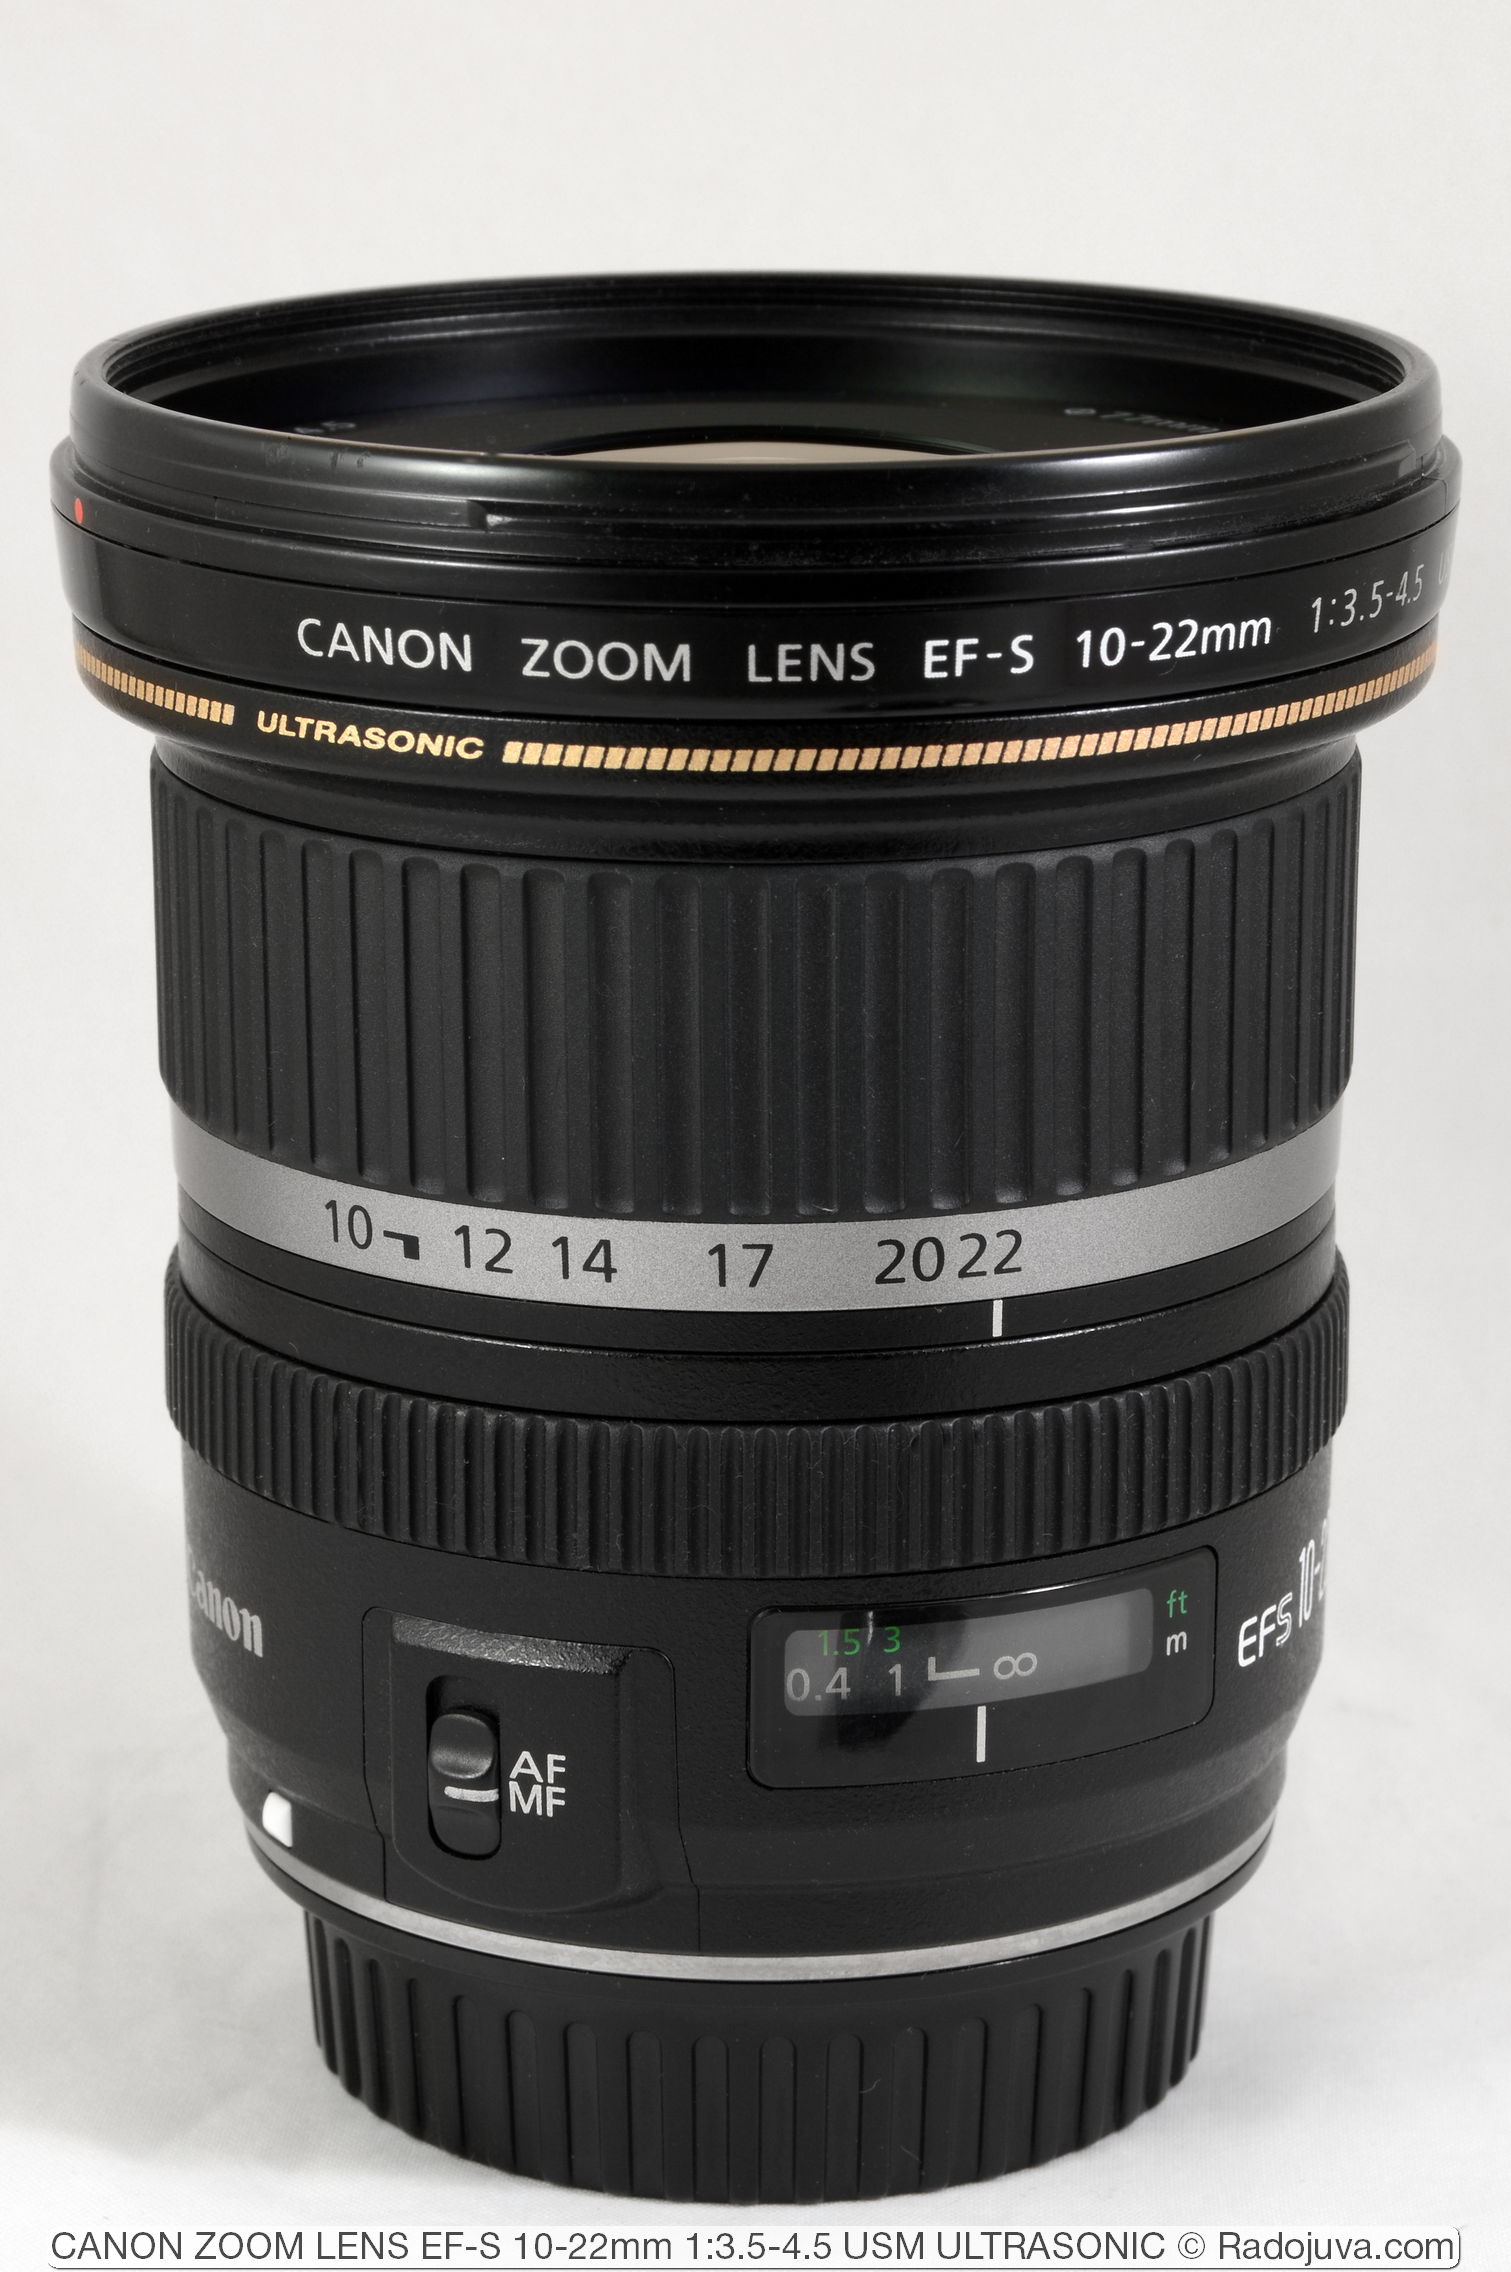 Canon Zoom Lens EF-S 10-22mm 1:3.5-4.5 USM ULTRASONIC